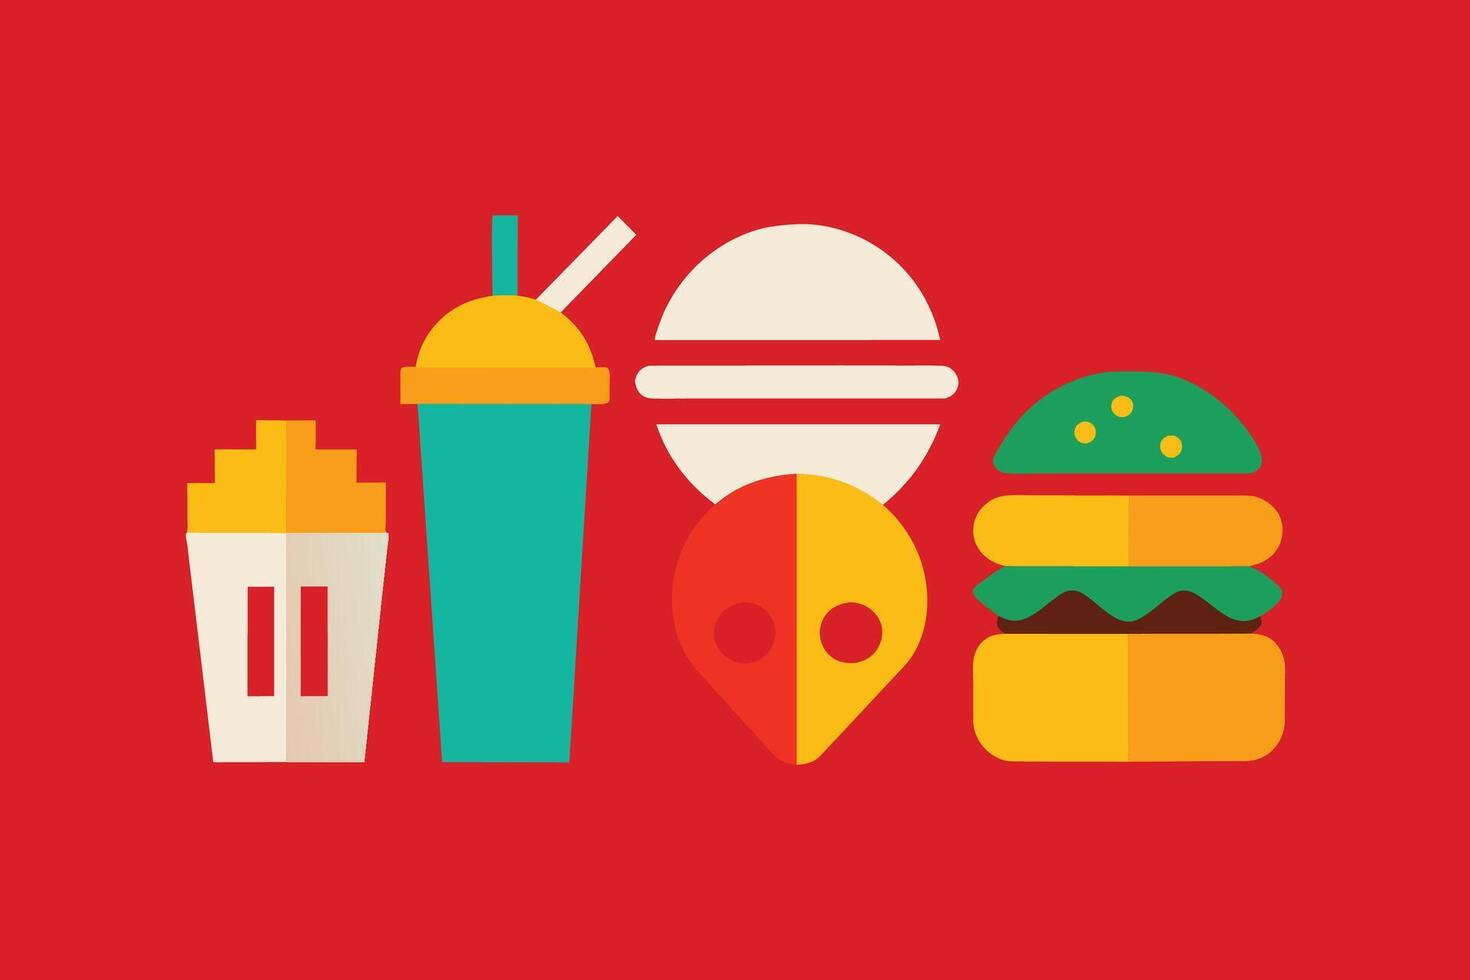 Fast food Icon Design Set vector